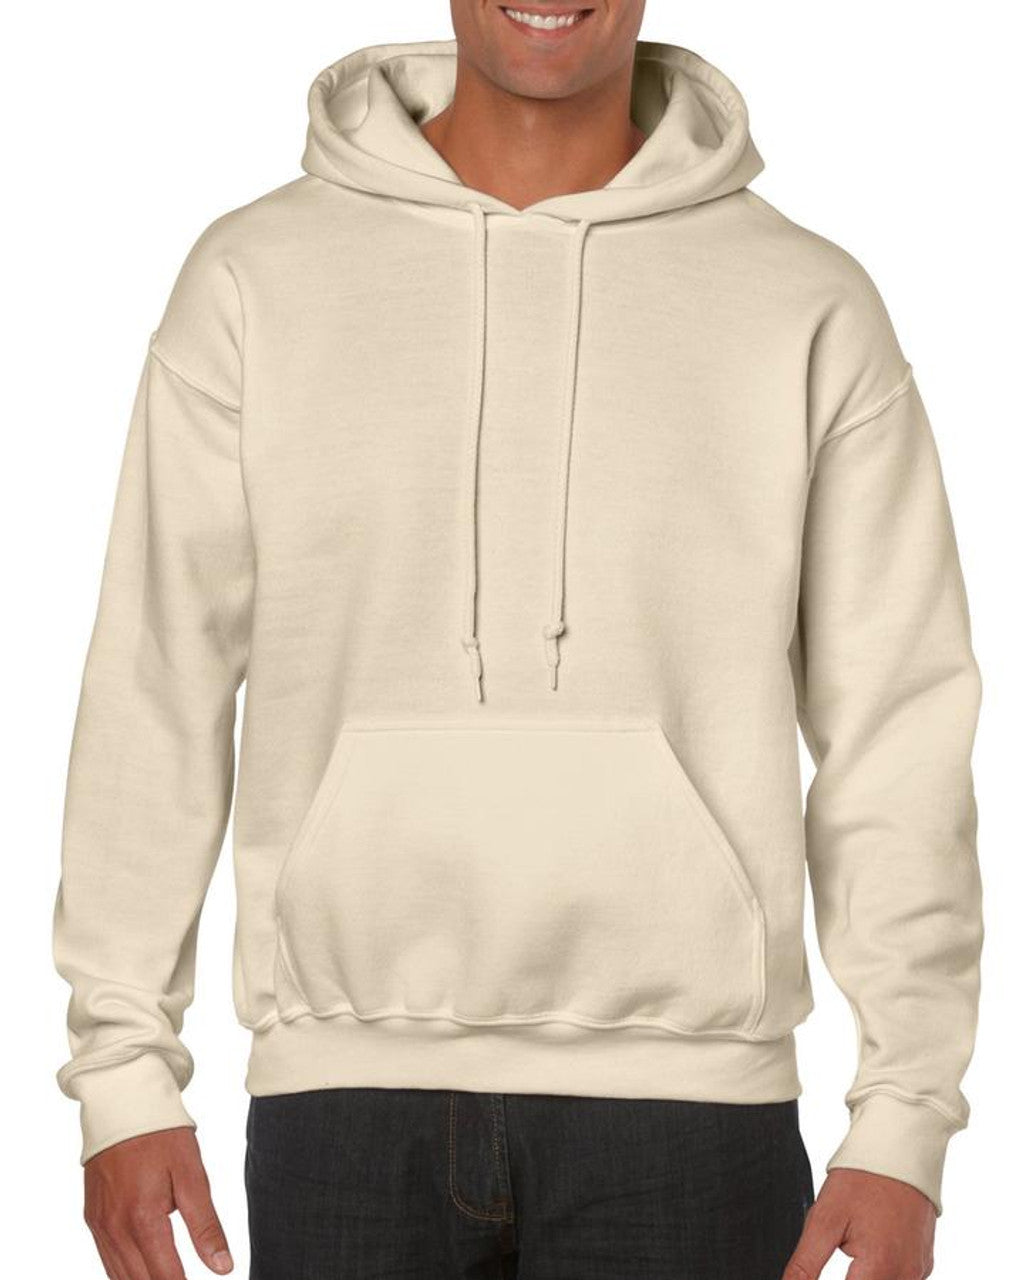 Gildan Unisex Heavy Blend Fleece Hooded Sweatshirt, Size Small to 3XL 